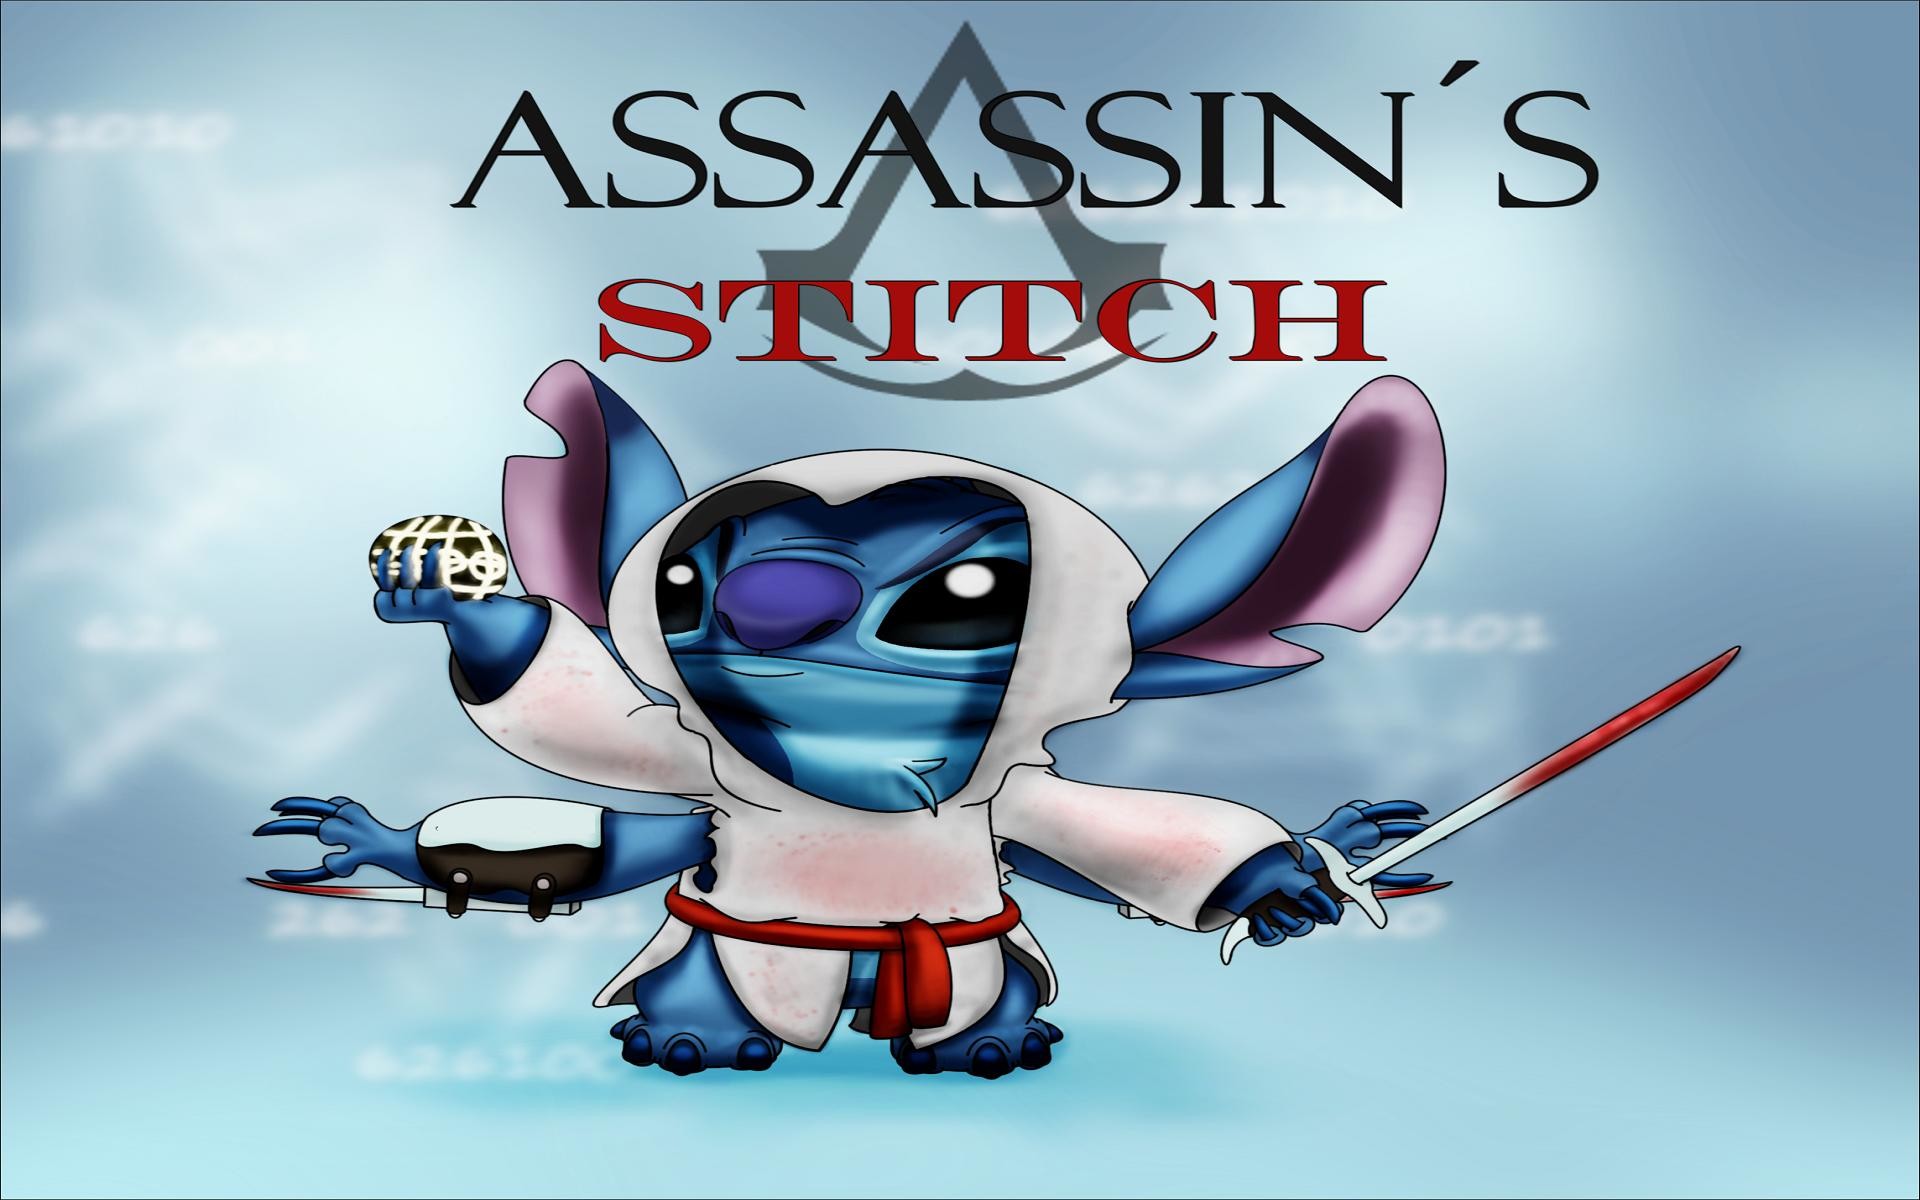 Stitch Wallpaper Theme Lilo Funny Cute Lock Screen APK for Android Download